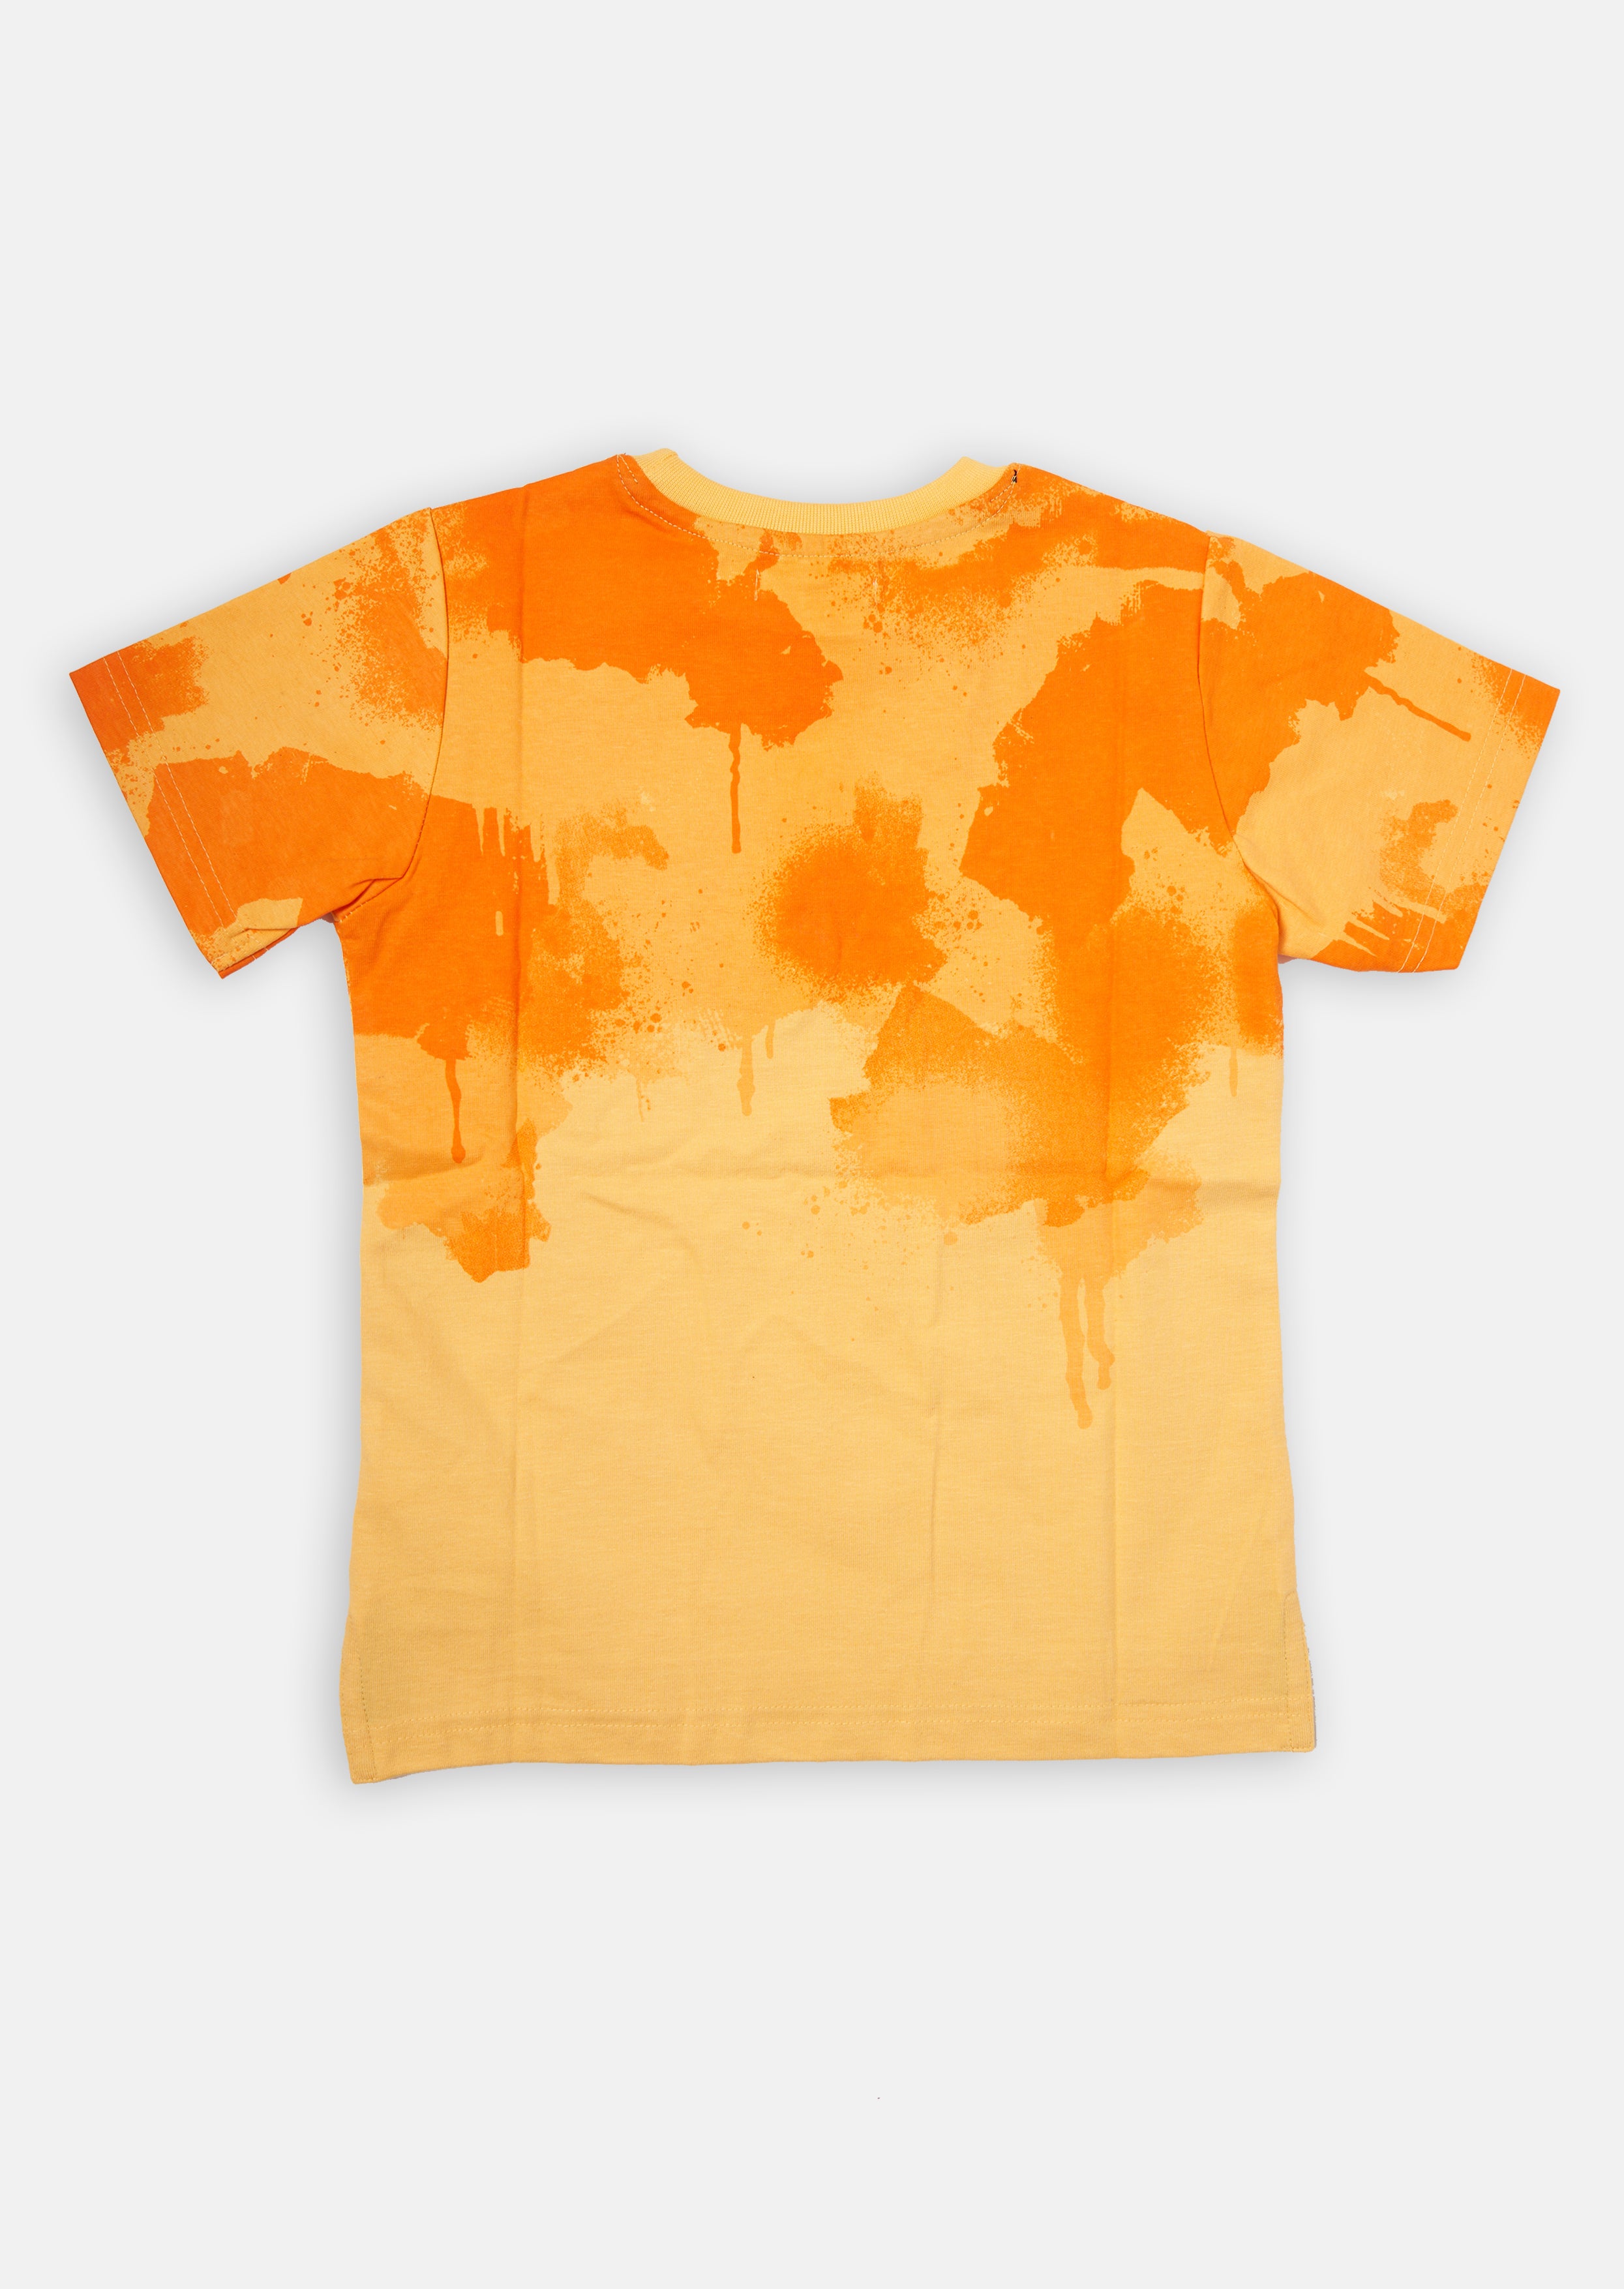 Boys Cool Dude Printed Orange T-Shirt